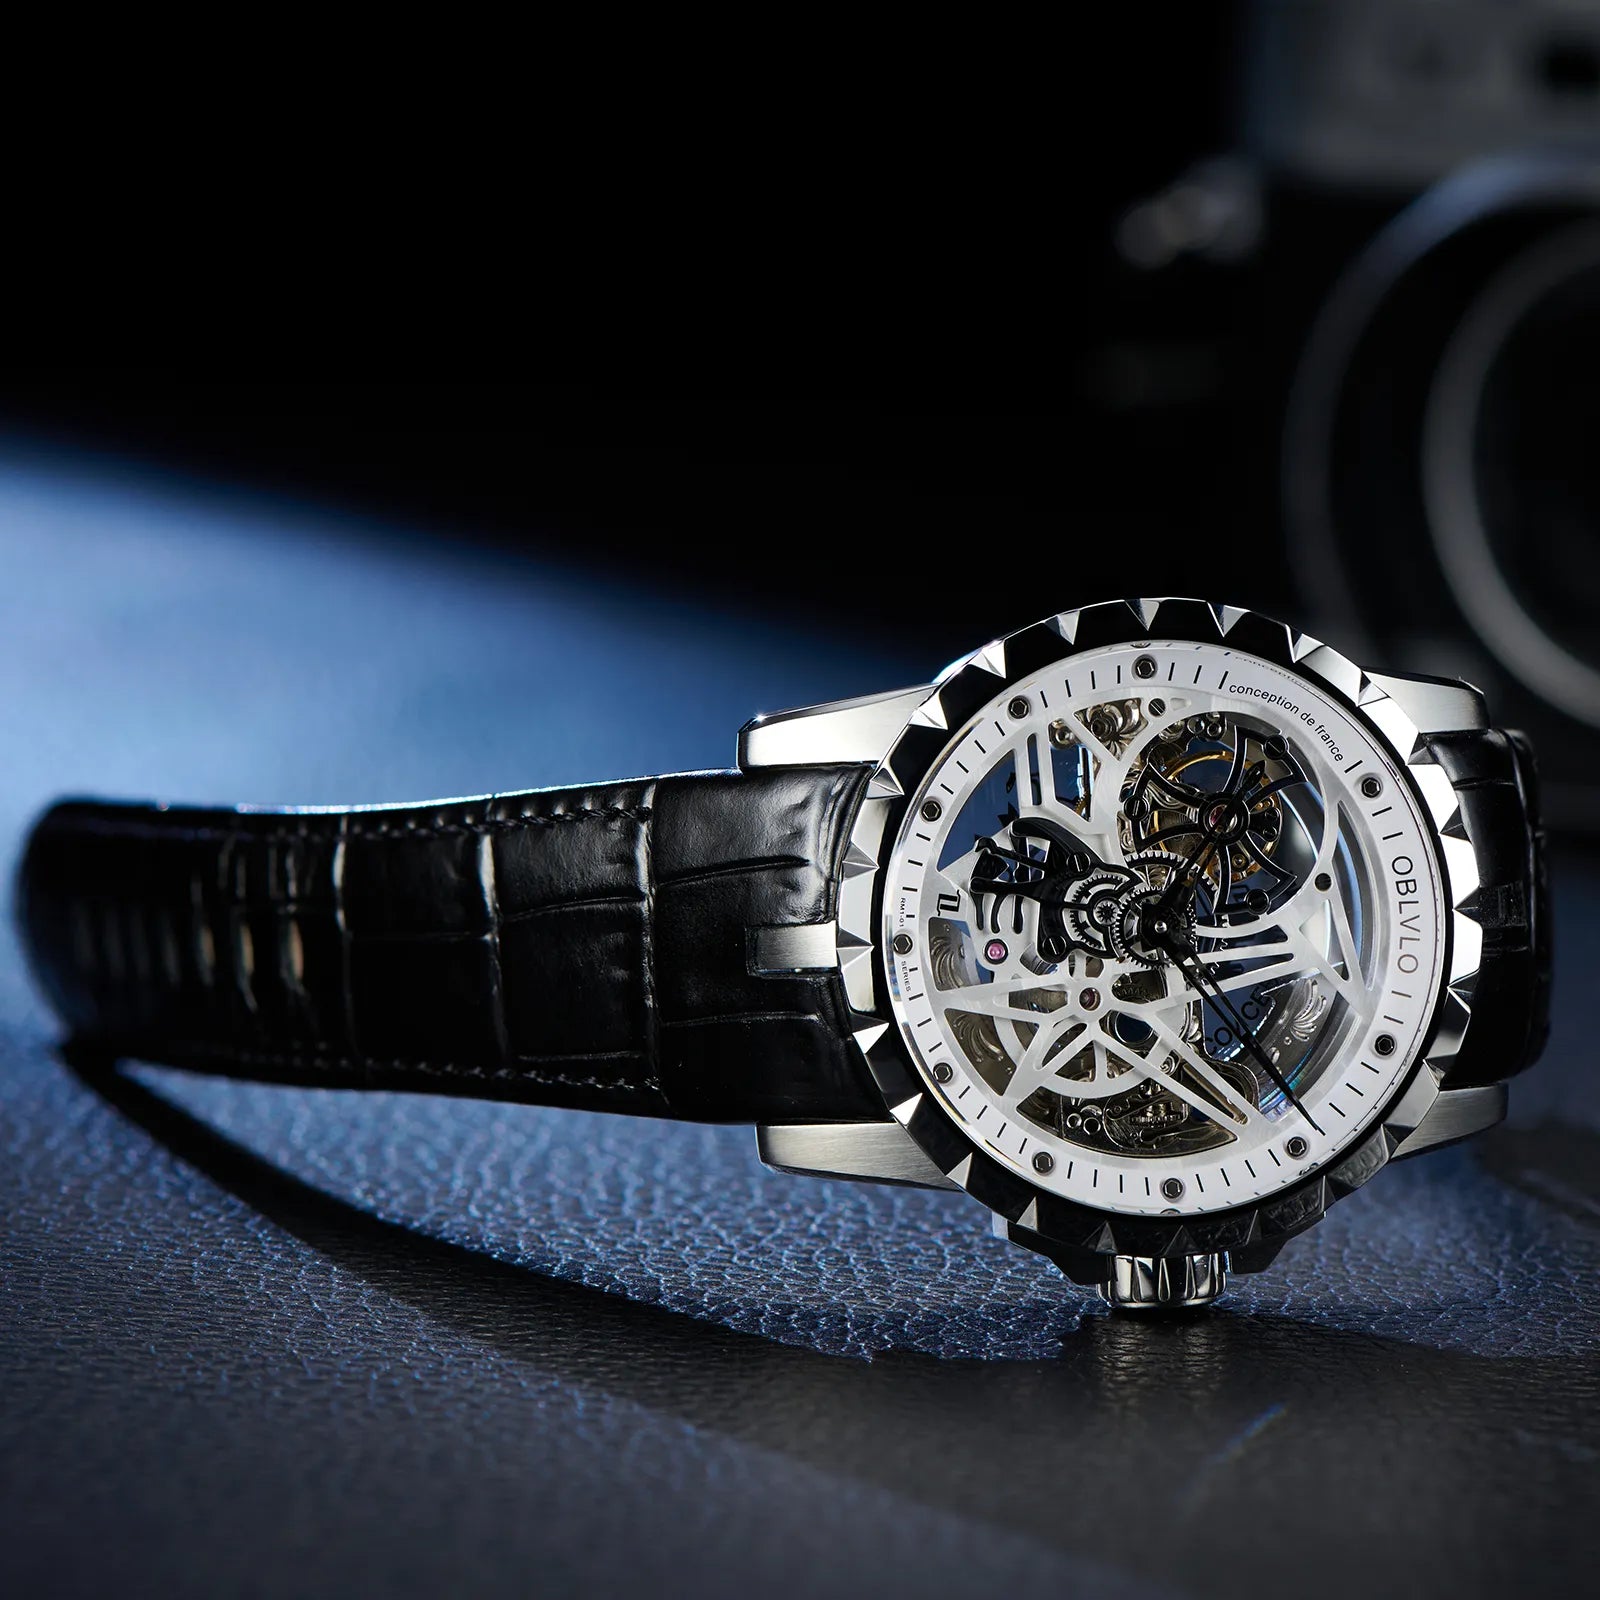 OBLVLO Luxury Sport Men Skeleton Automatical Watch Mechanical Calfskin Strap Pin Buckle Sapphire Waterproof Clock Dial 46mm RM-S